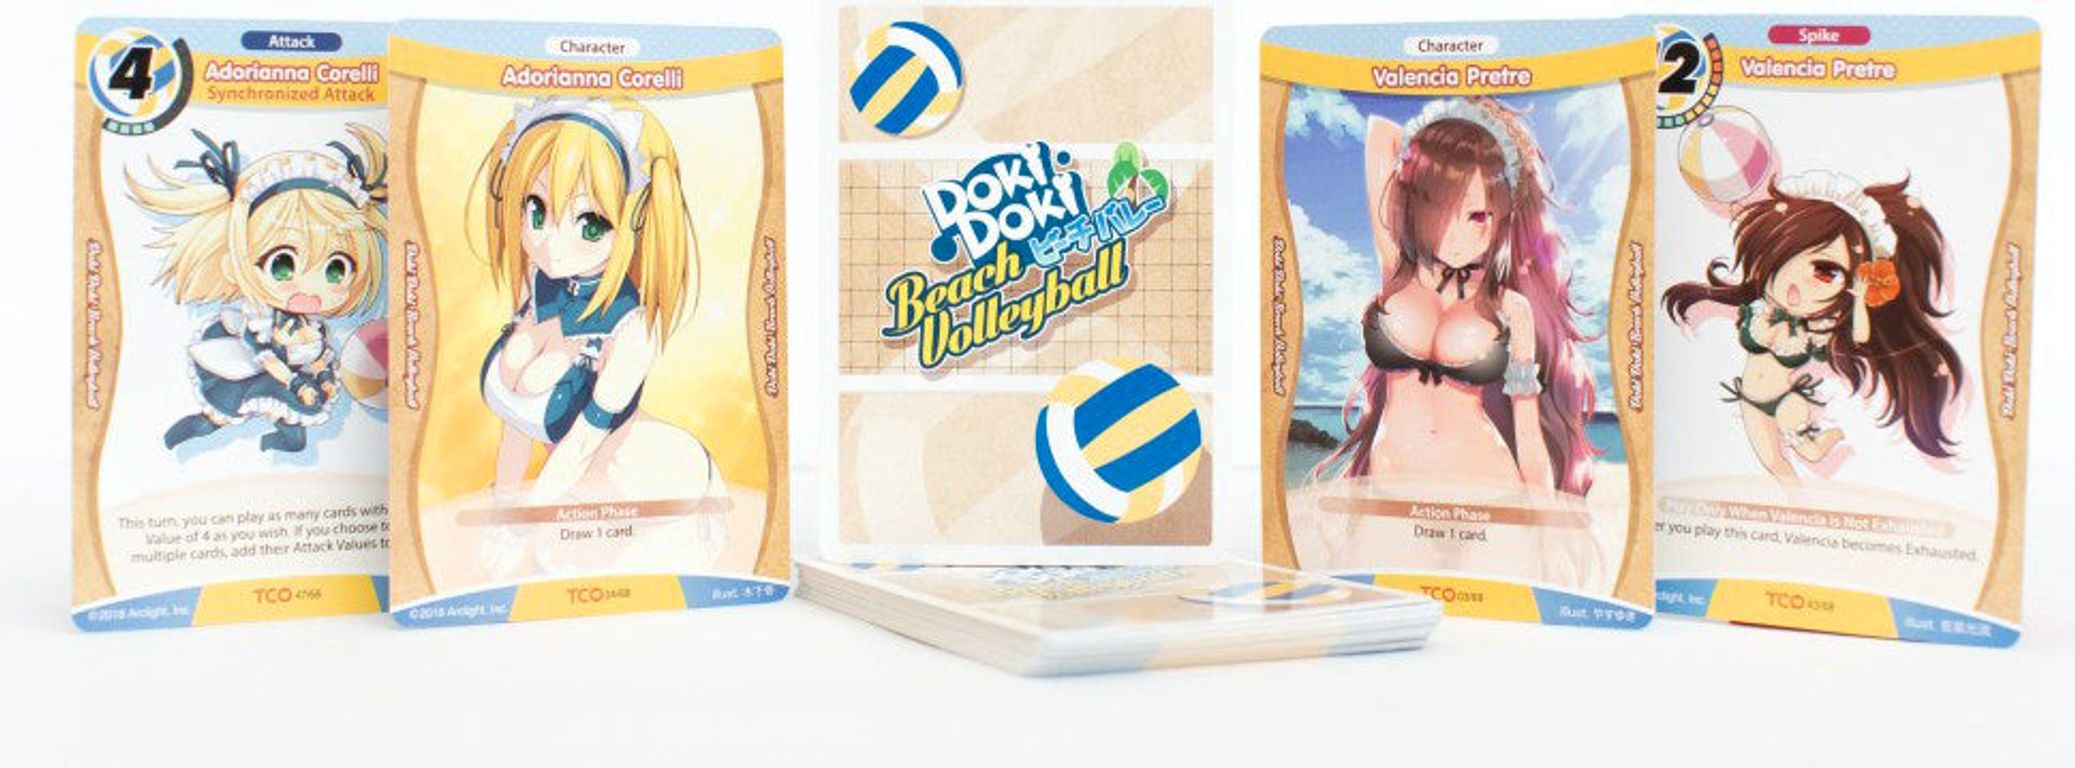 Tanto Cuore: Doki Doki Beach Volleyball carte